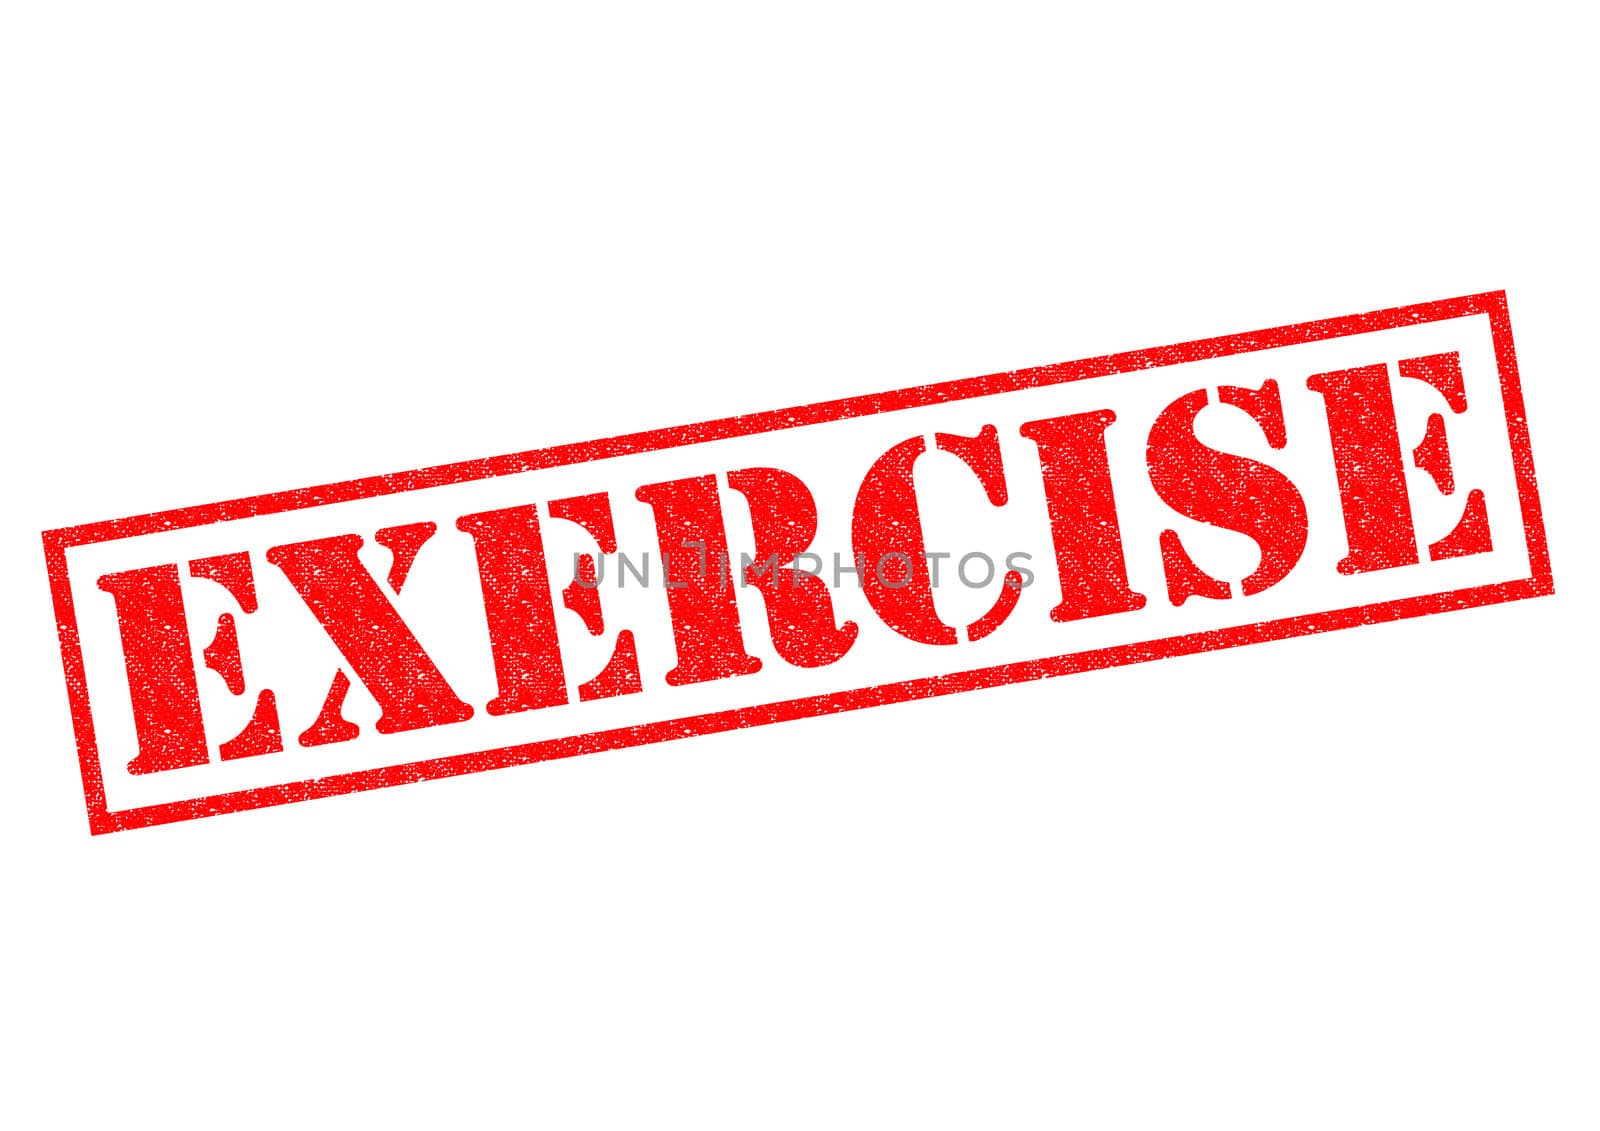 EXERCISE by chrisdorney